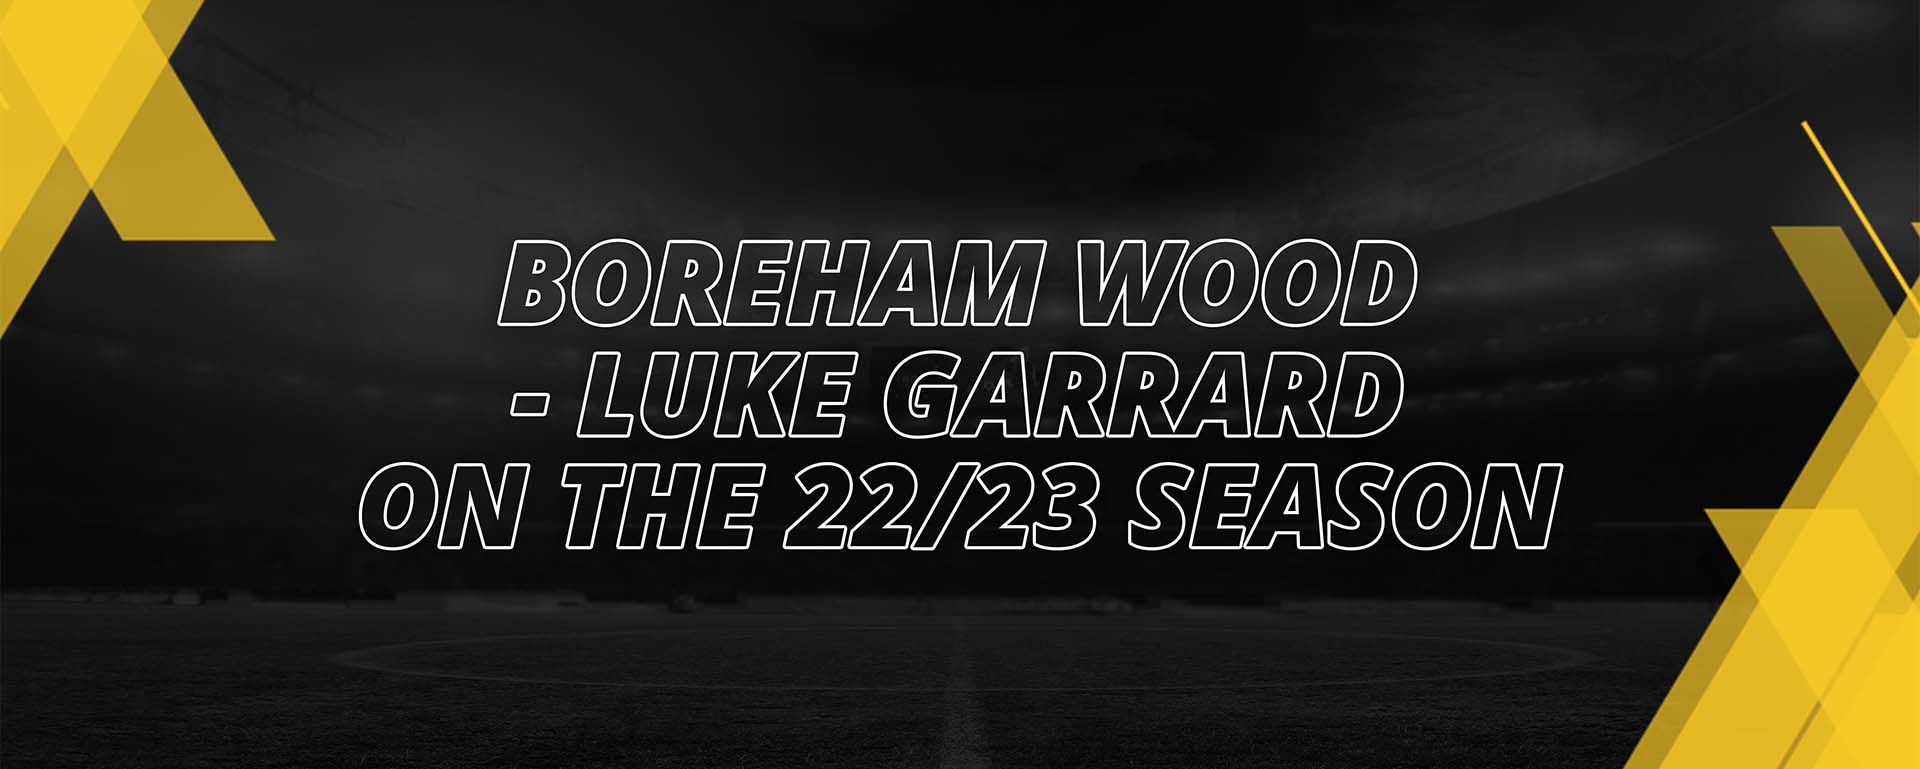 BOREHAM WOOD – LUKE GARRARD ON THE 22/23 SEASON